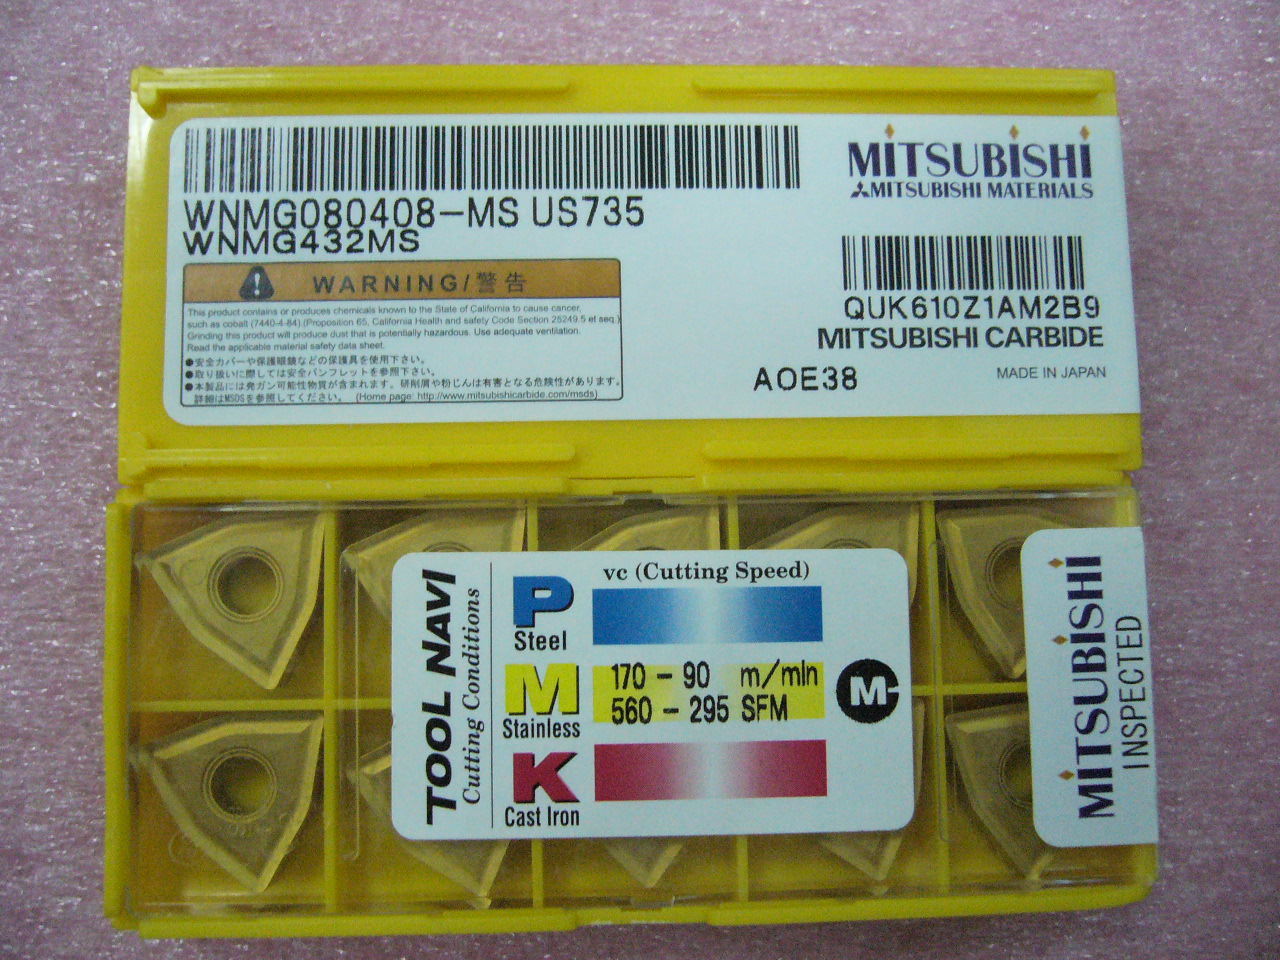 QTY 20x Mitsubishi WNMG432MS WNMG080408-MS US735 NEW